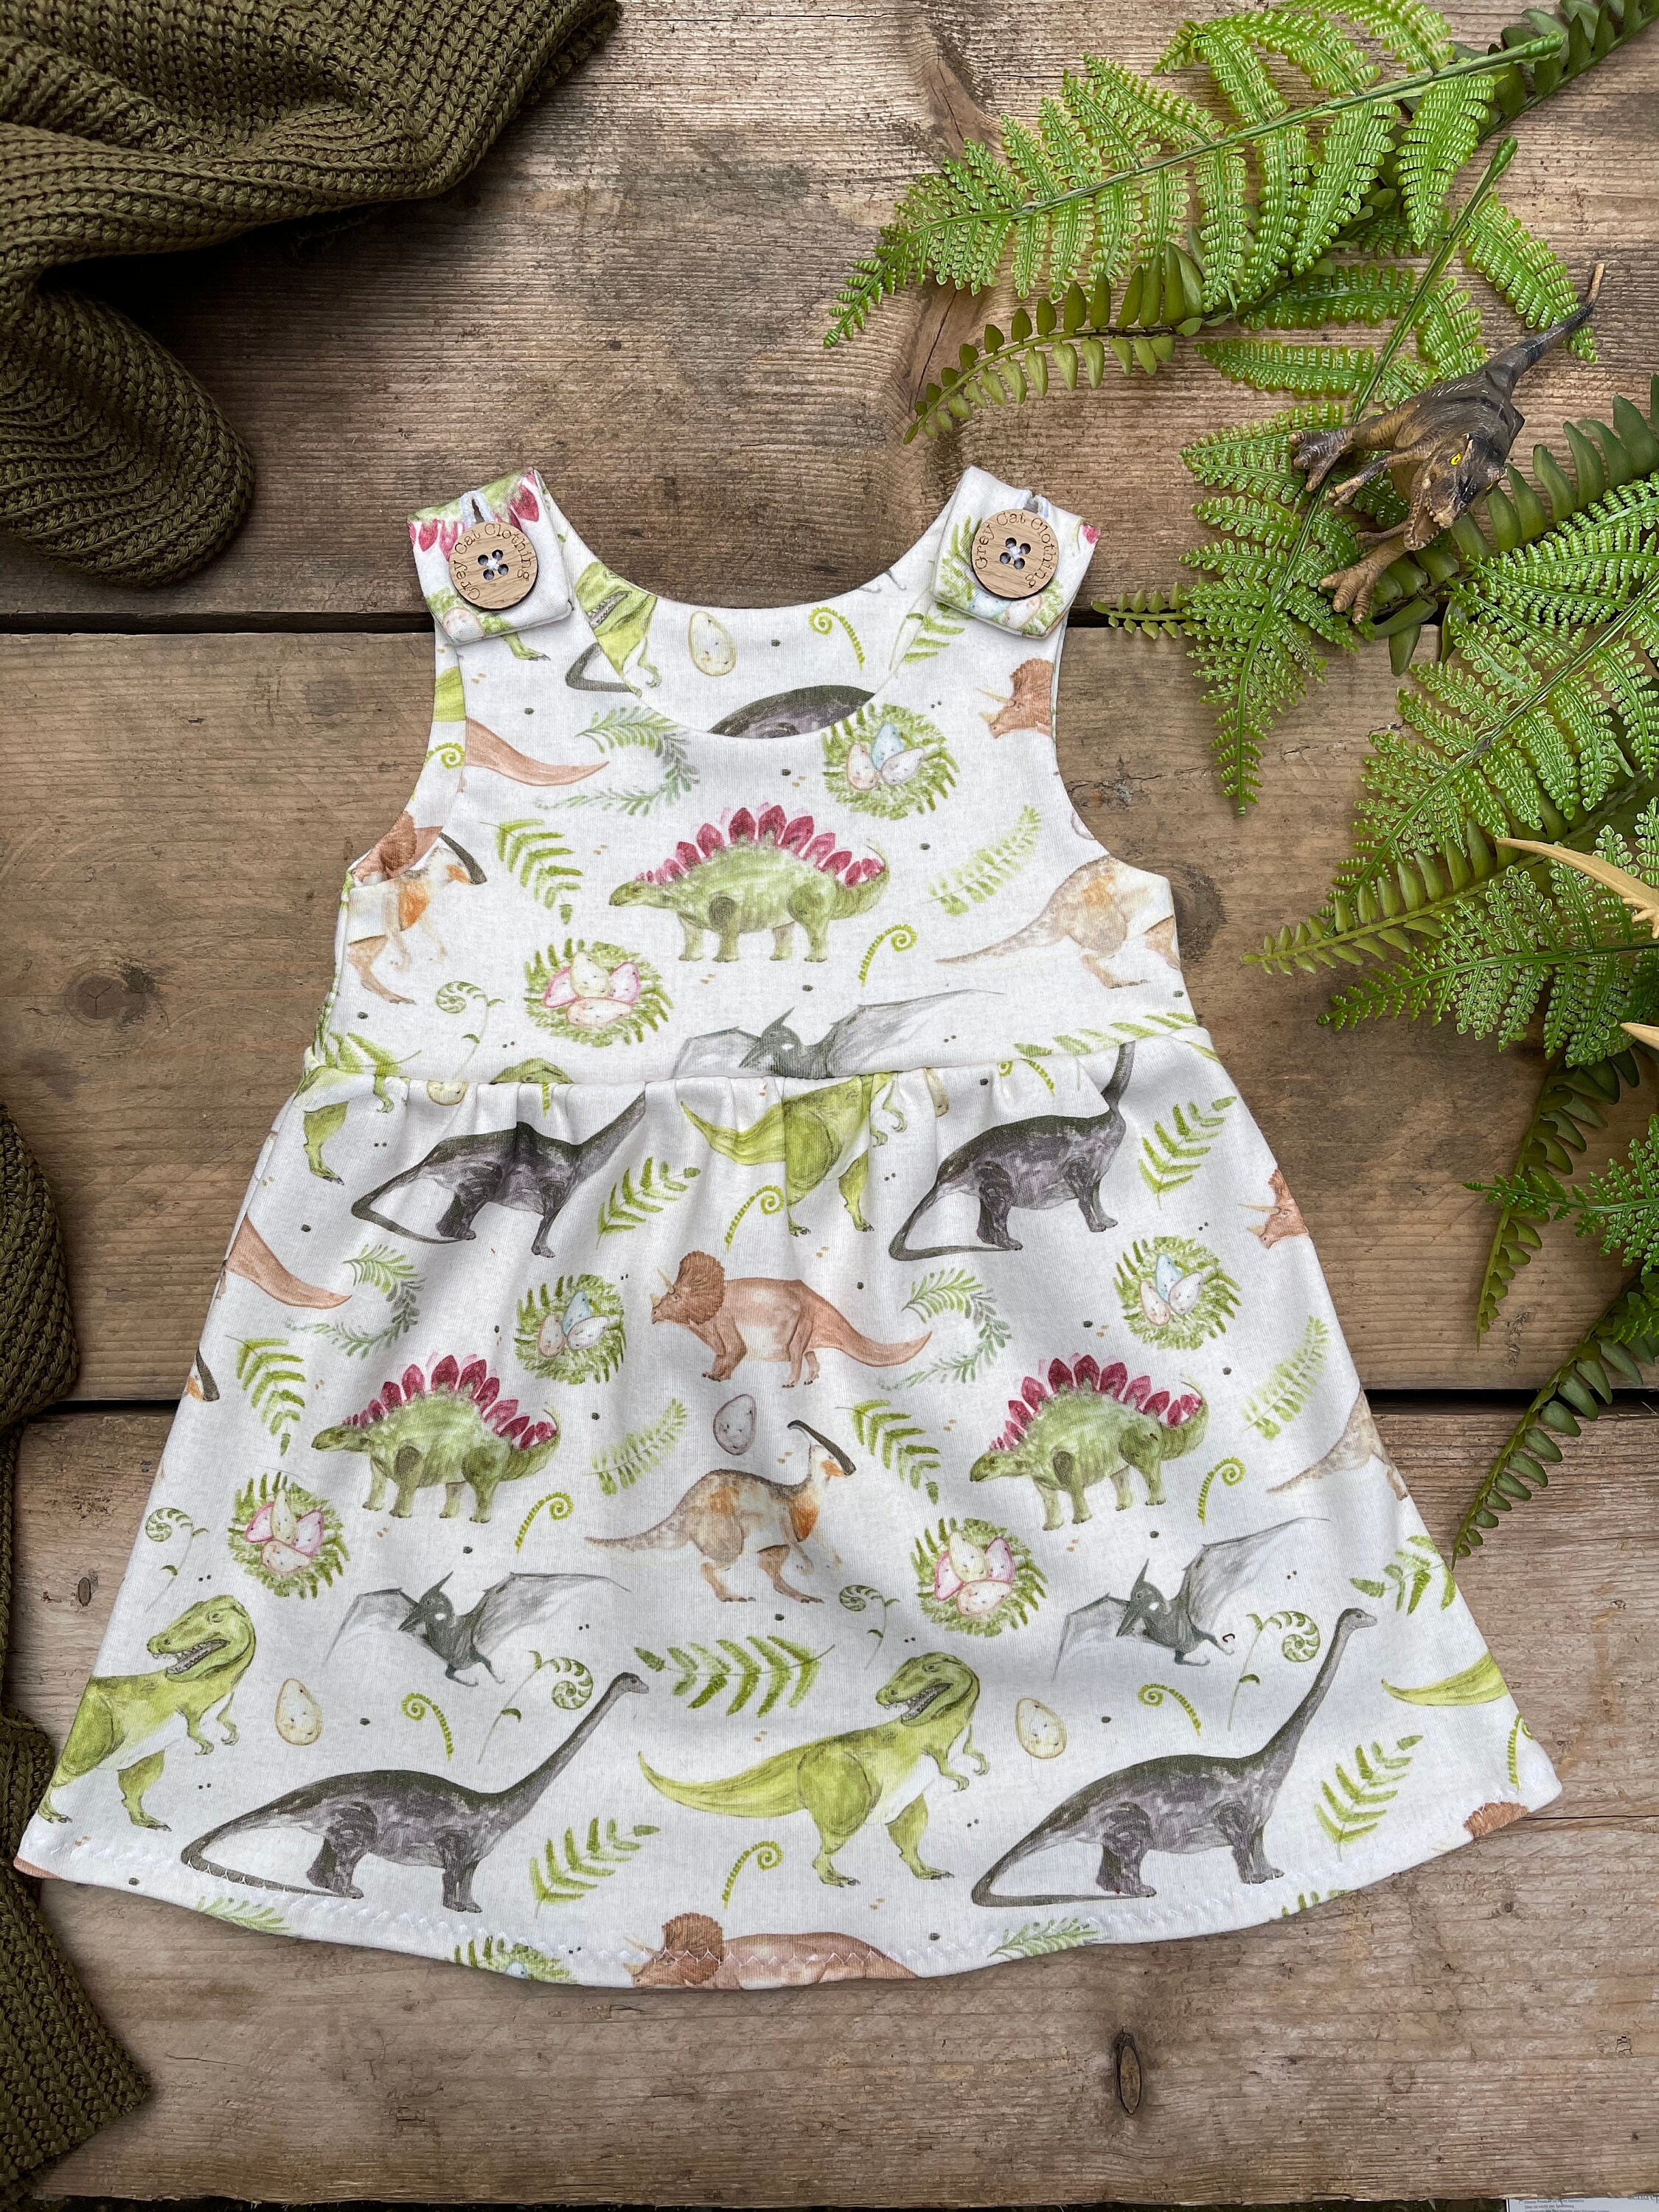 Hatoys Toddler Infant Baby Girls Halter Dinosaur Print Dresses Clothing Outfits 